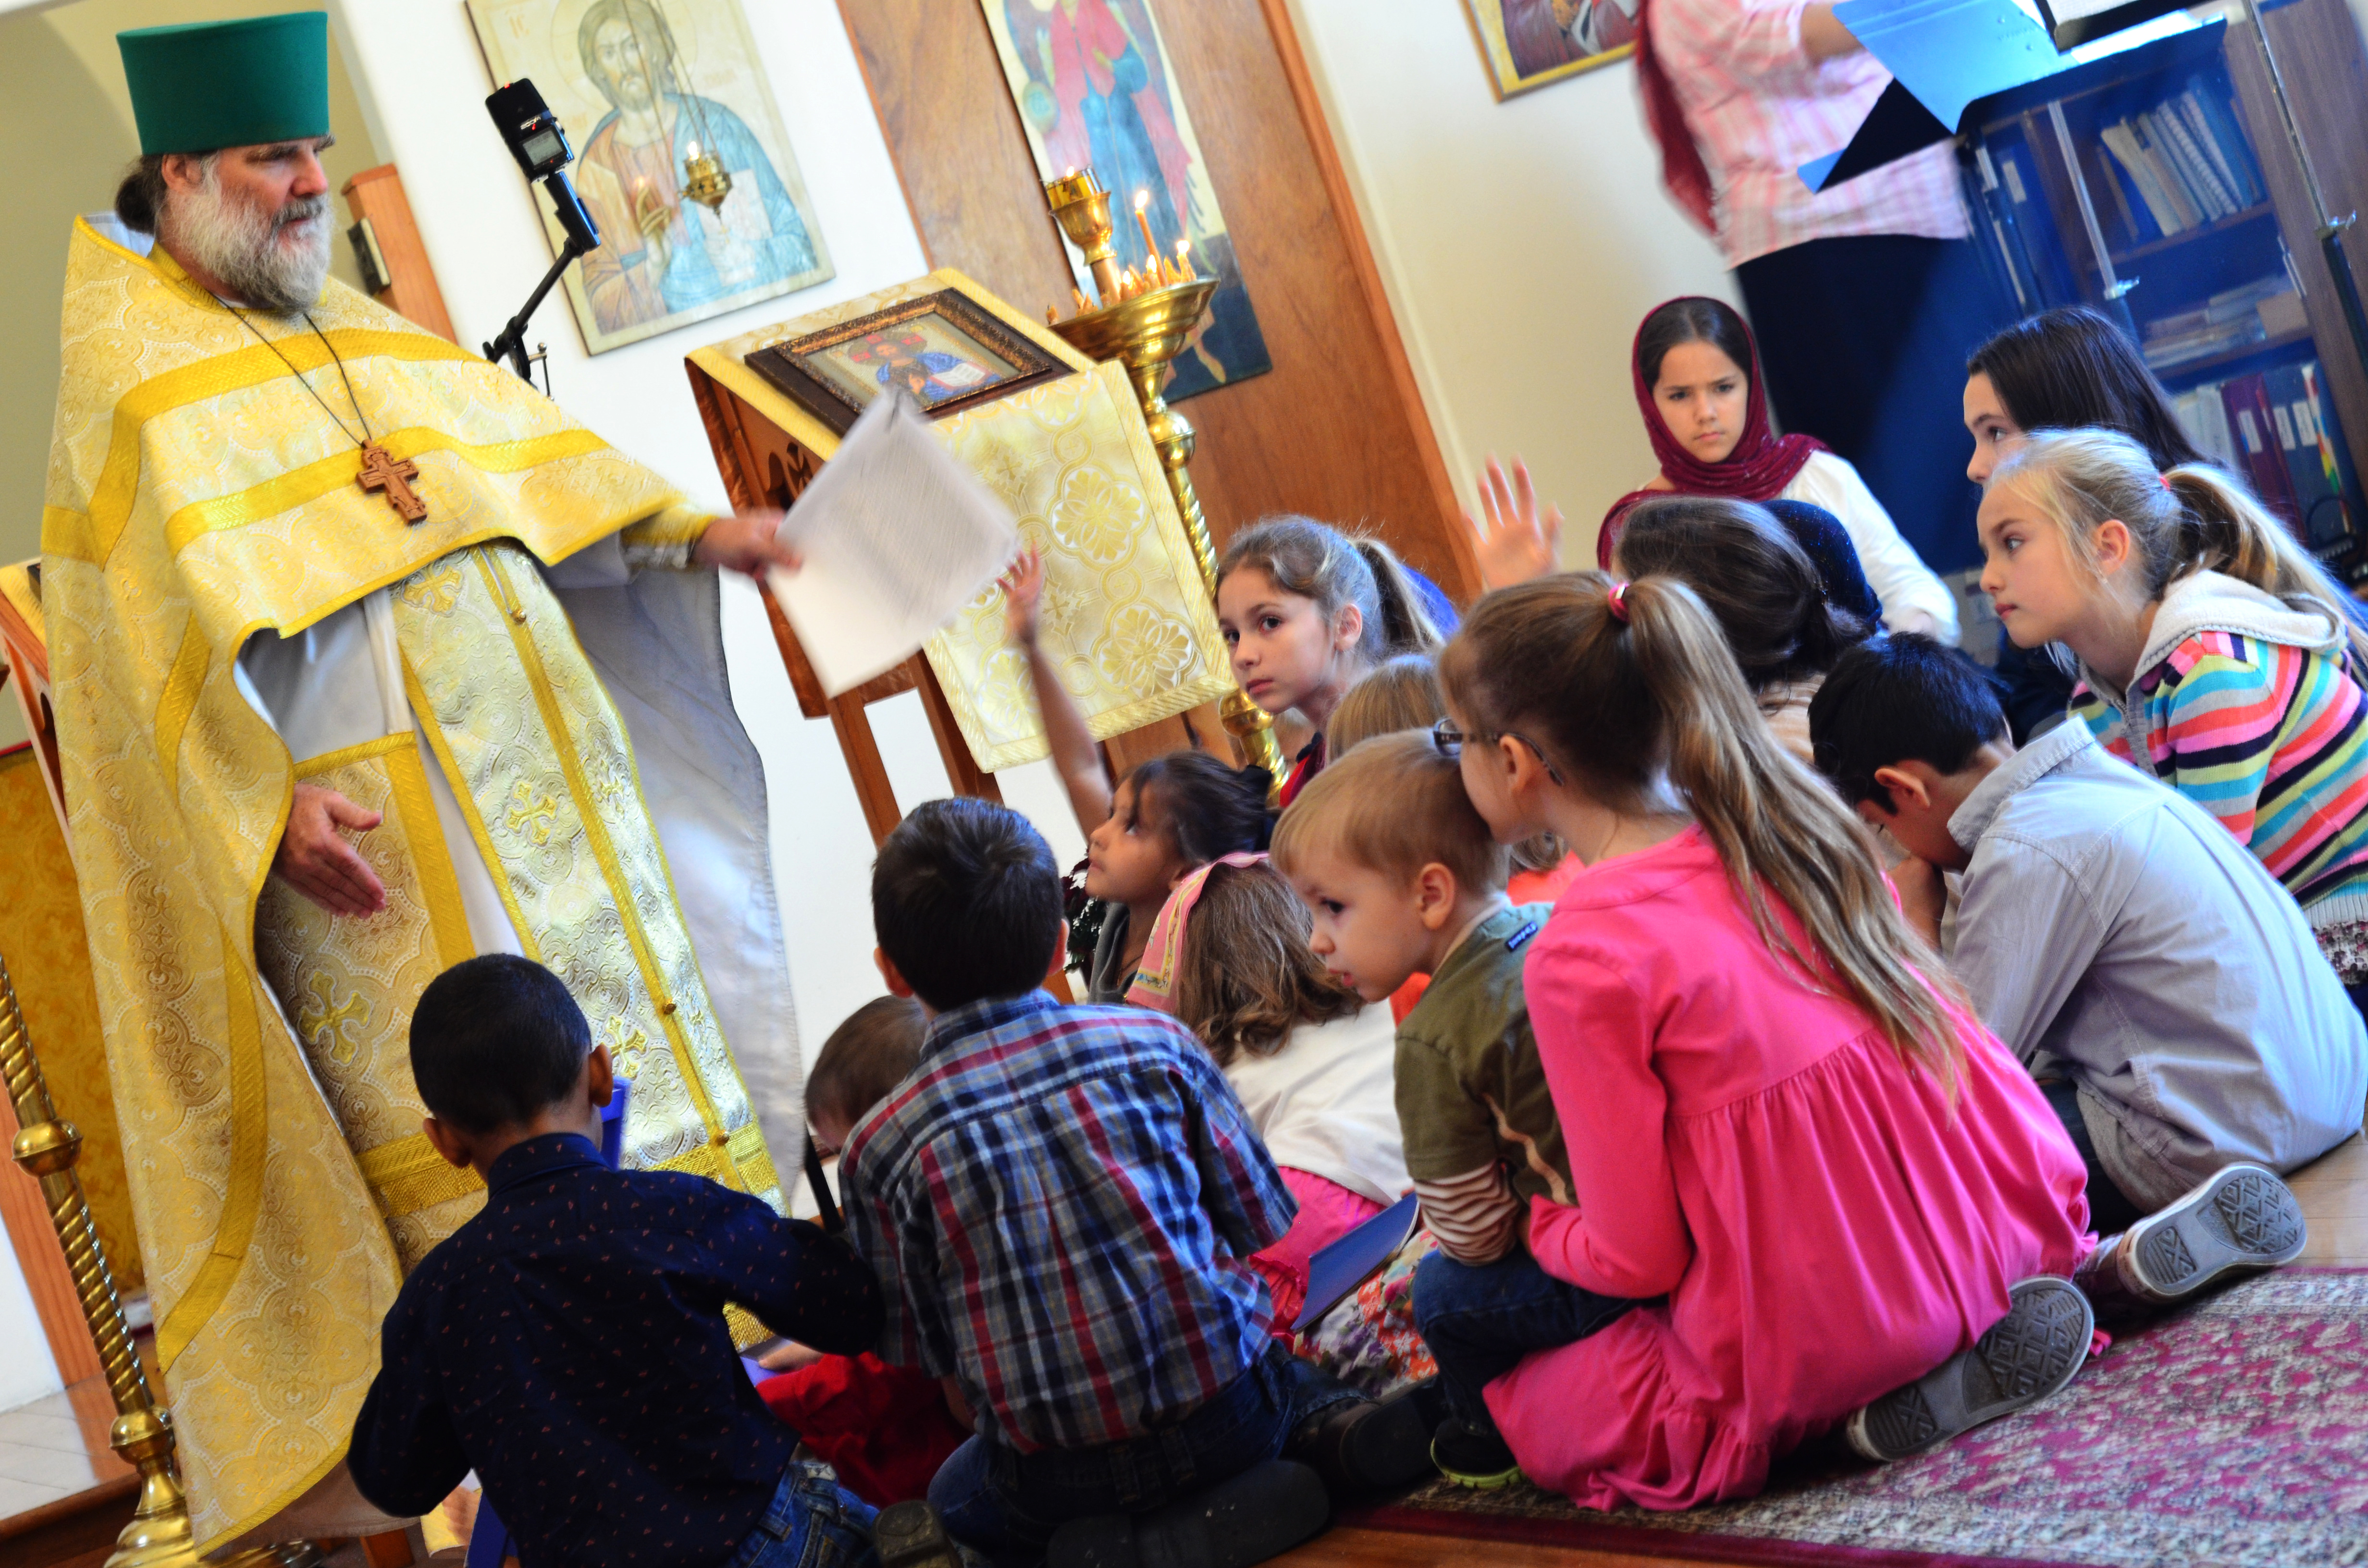 http://www.orthodox.net/photos/parish/sermon-to-children-01.jpg